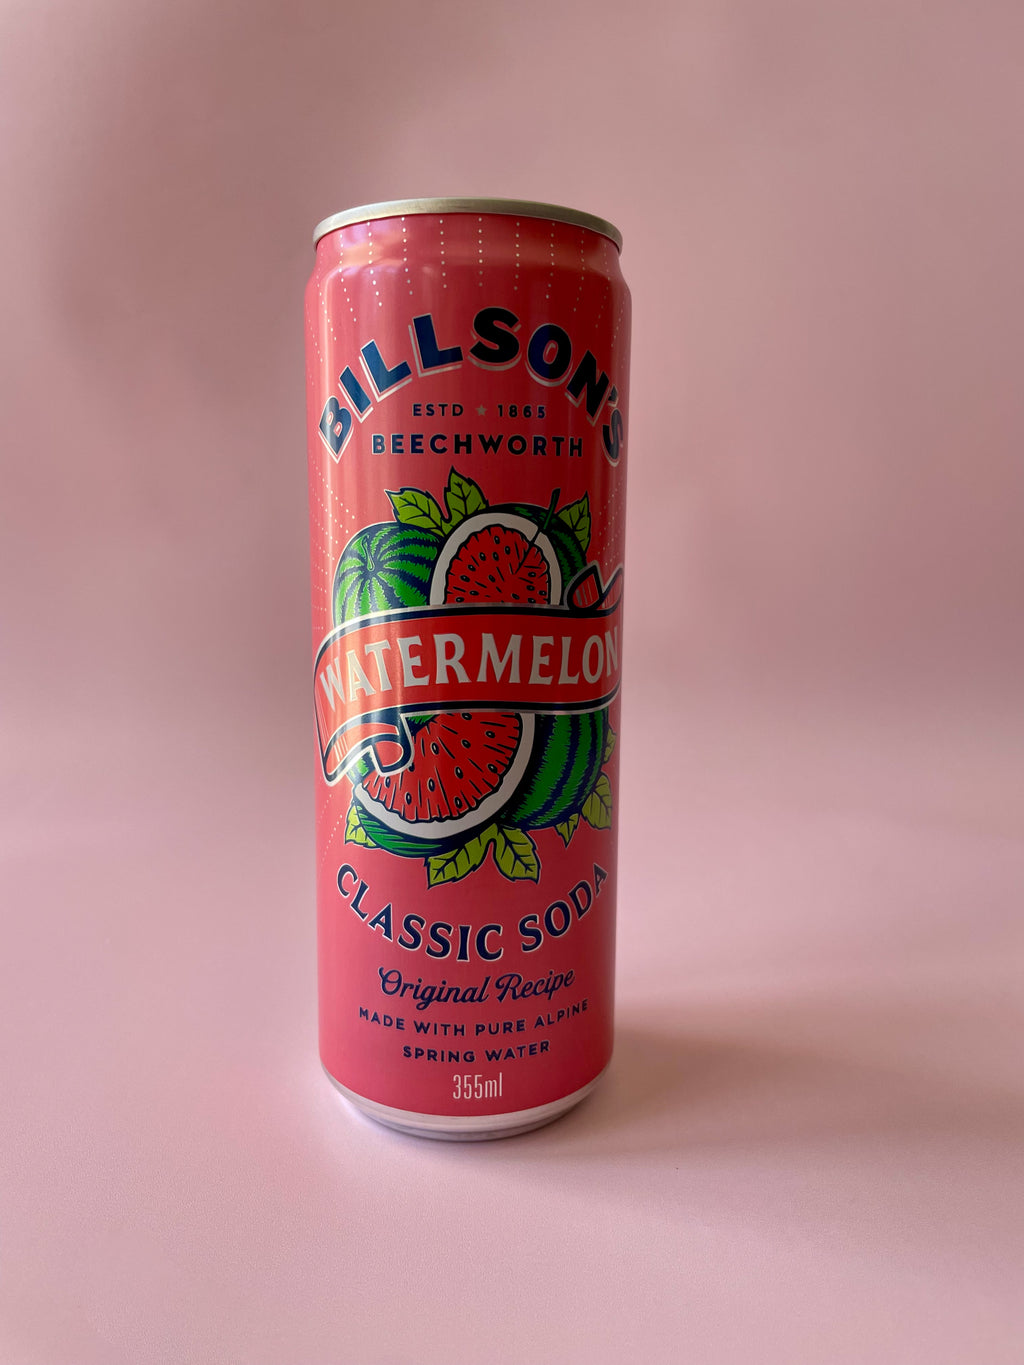 Billson's Watermelon Classic Soda